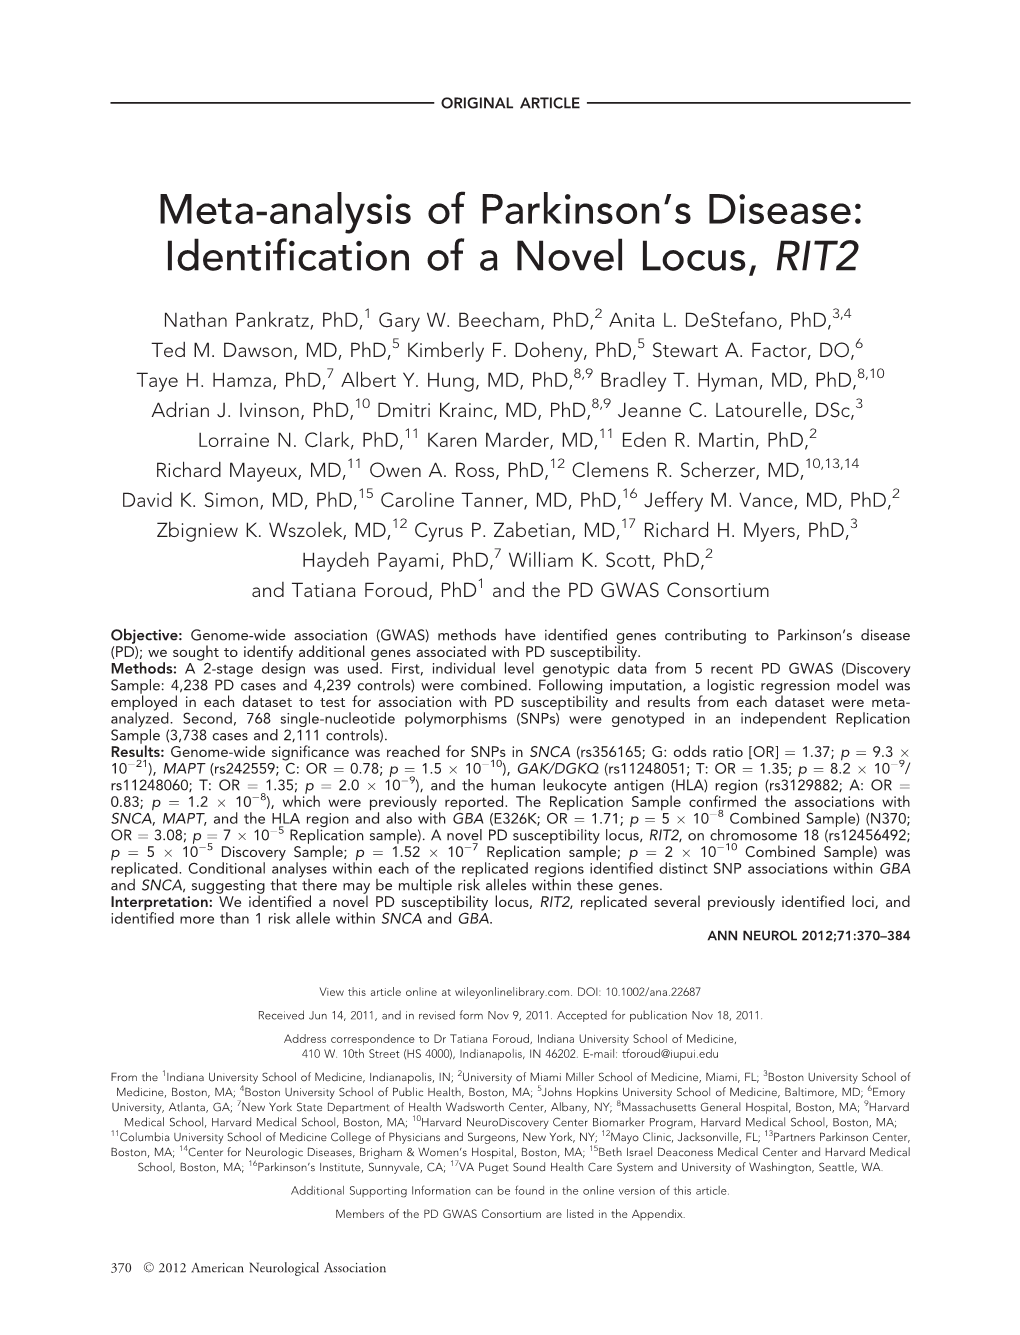 Metaanalysis of Parkinson's Disease: Identification of a Novel Locus, RIT2